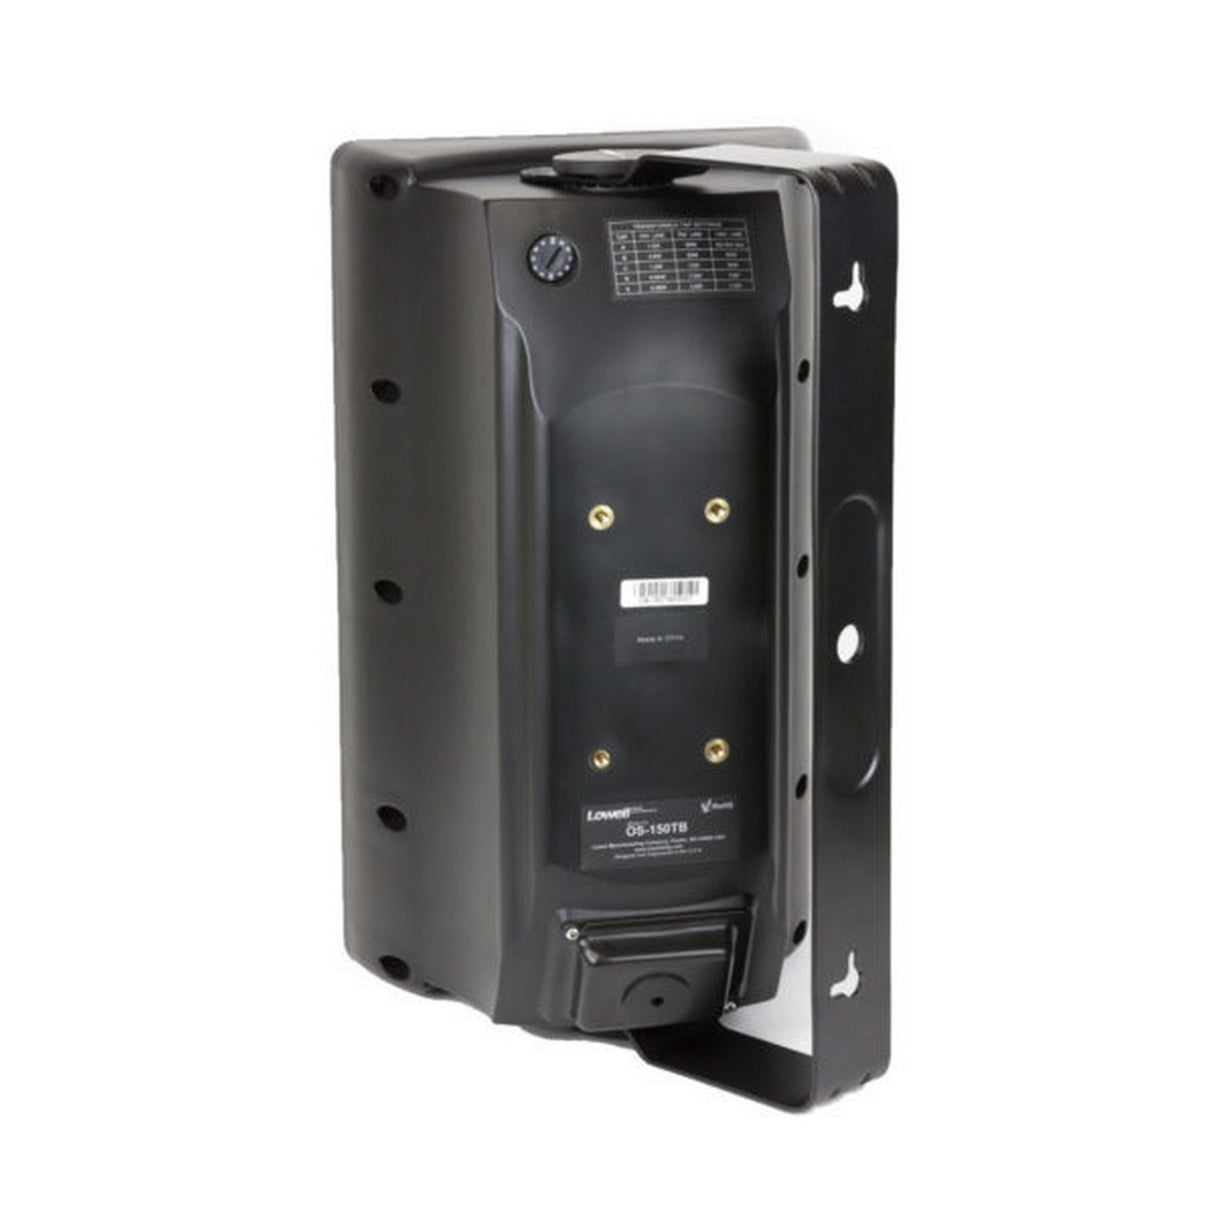 Lowell OS-150-TB 8 Inch 150W Indoor/Outdoor Speaker, Black